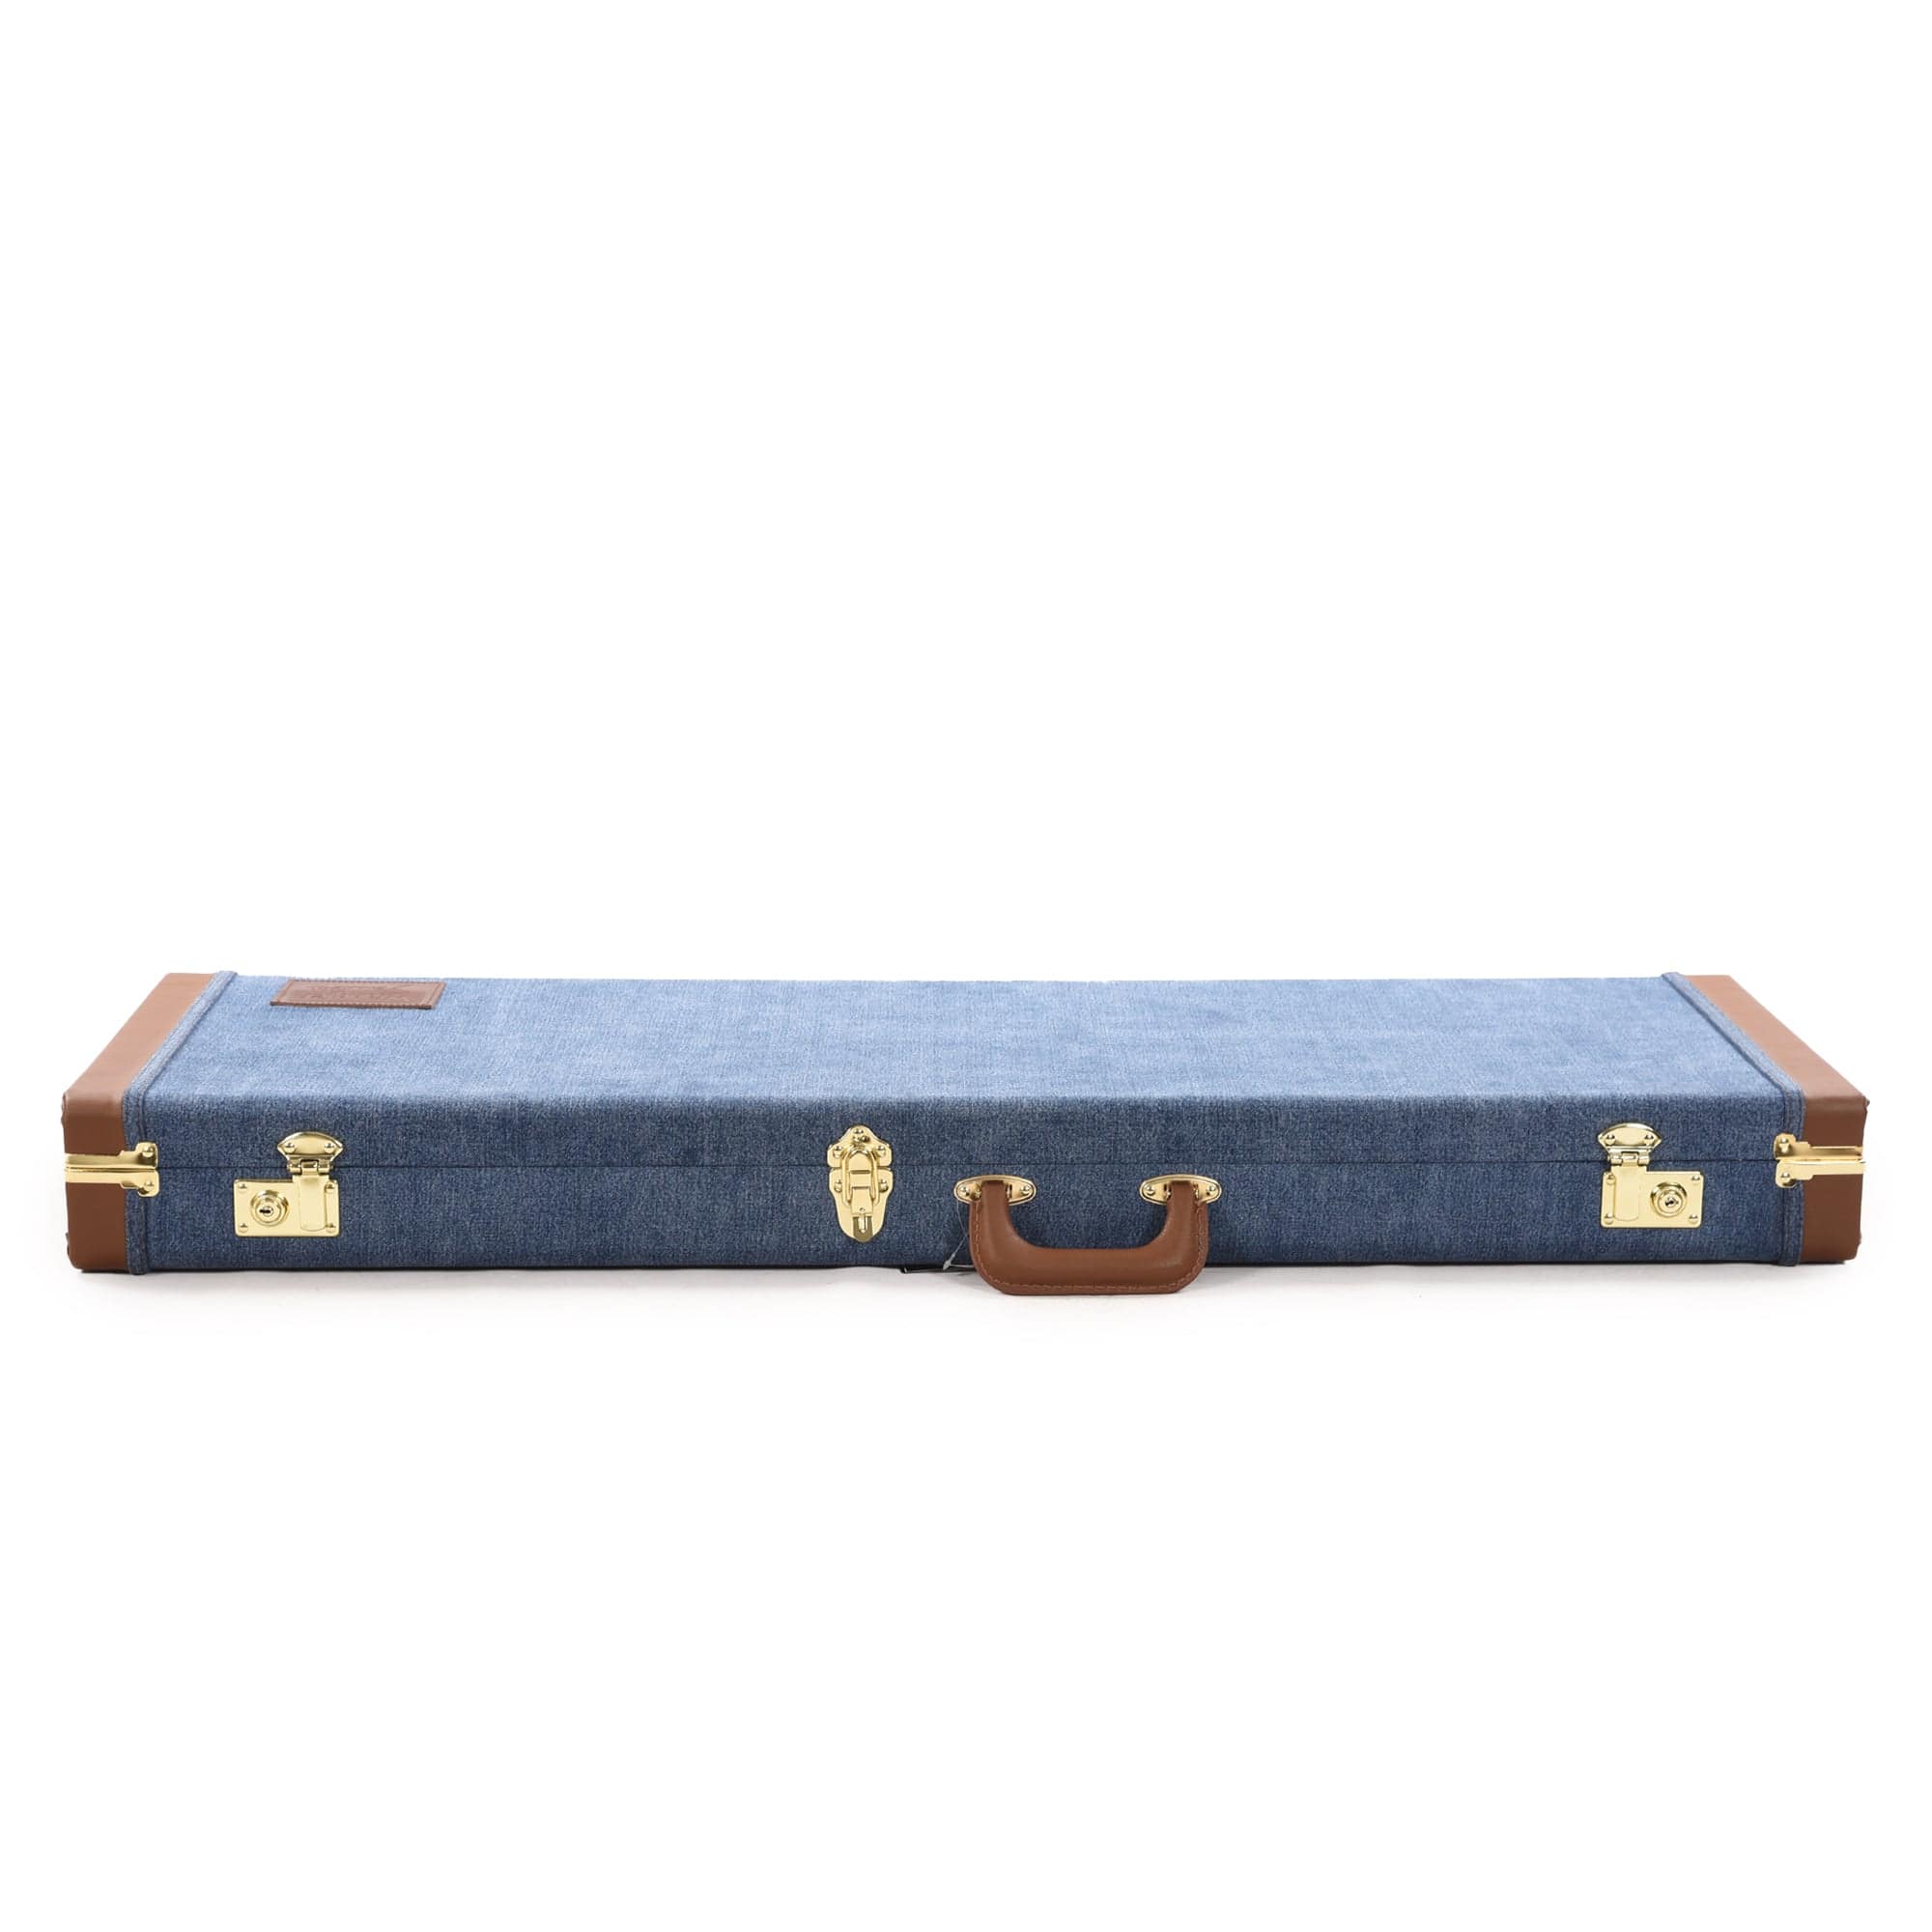 Lifton Historic Black/Goldenrod Hardshell Case, ES-335